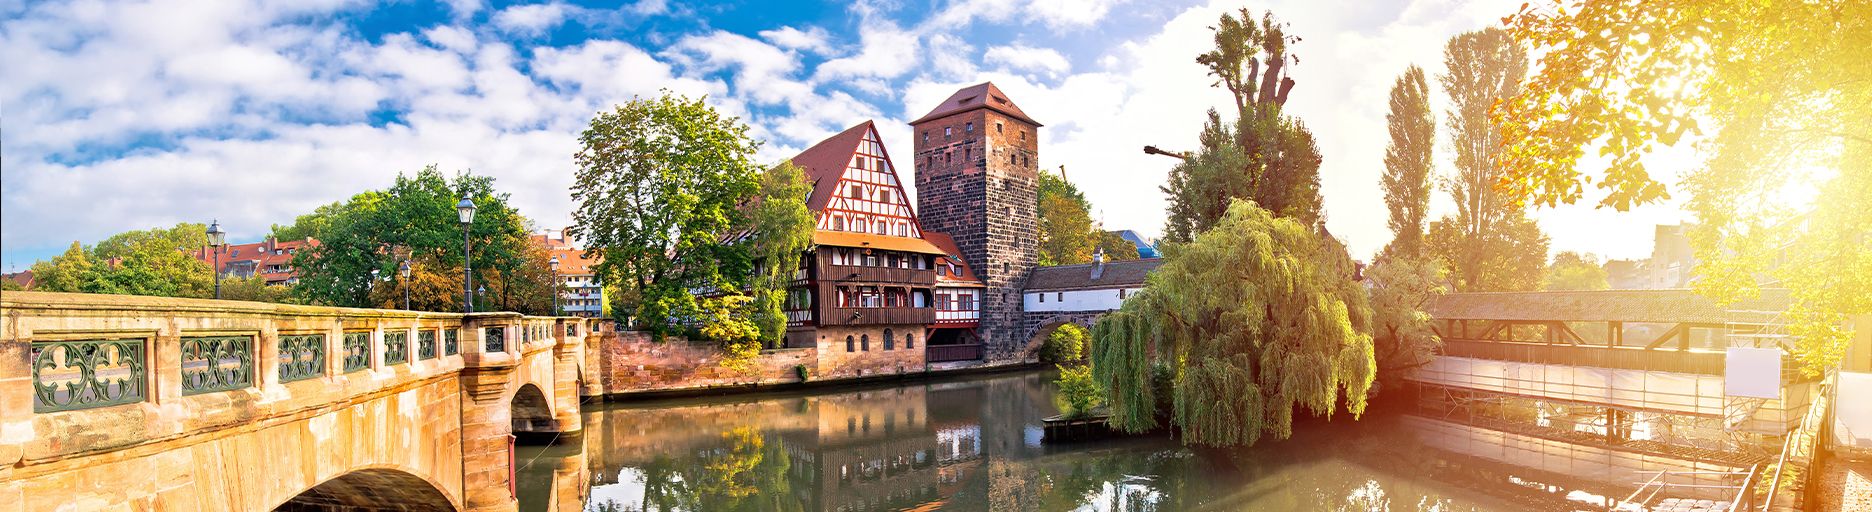 Havesto Immobilien – Ihr Immobilienmakler in Nürnberg